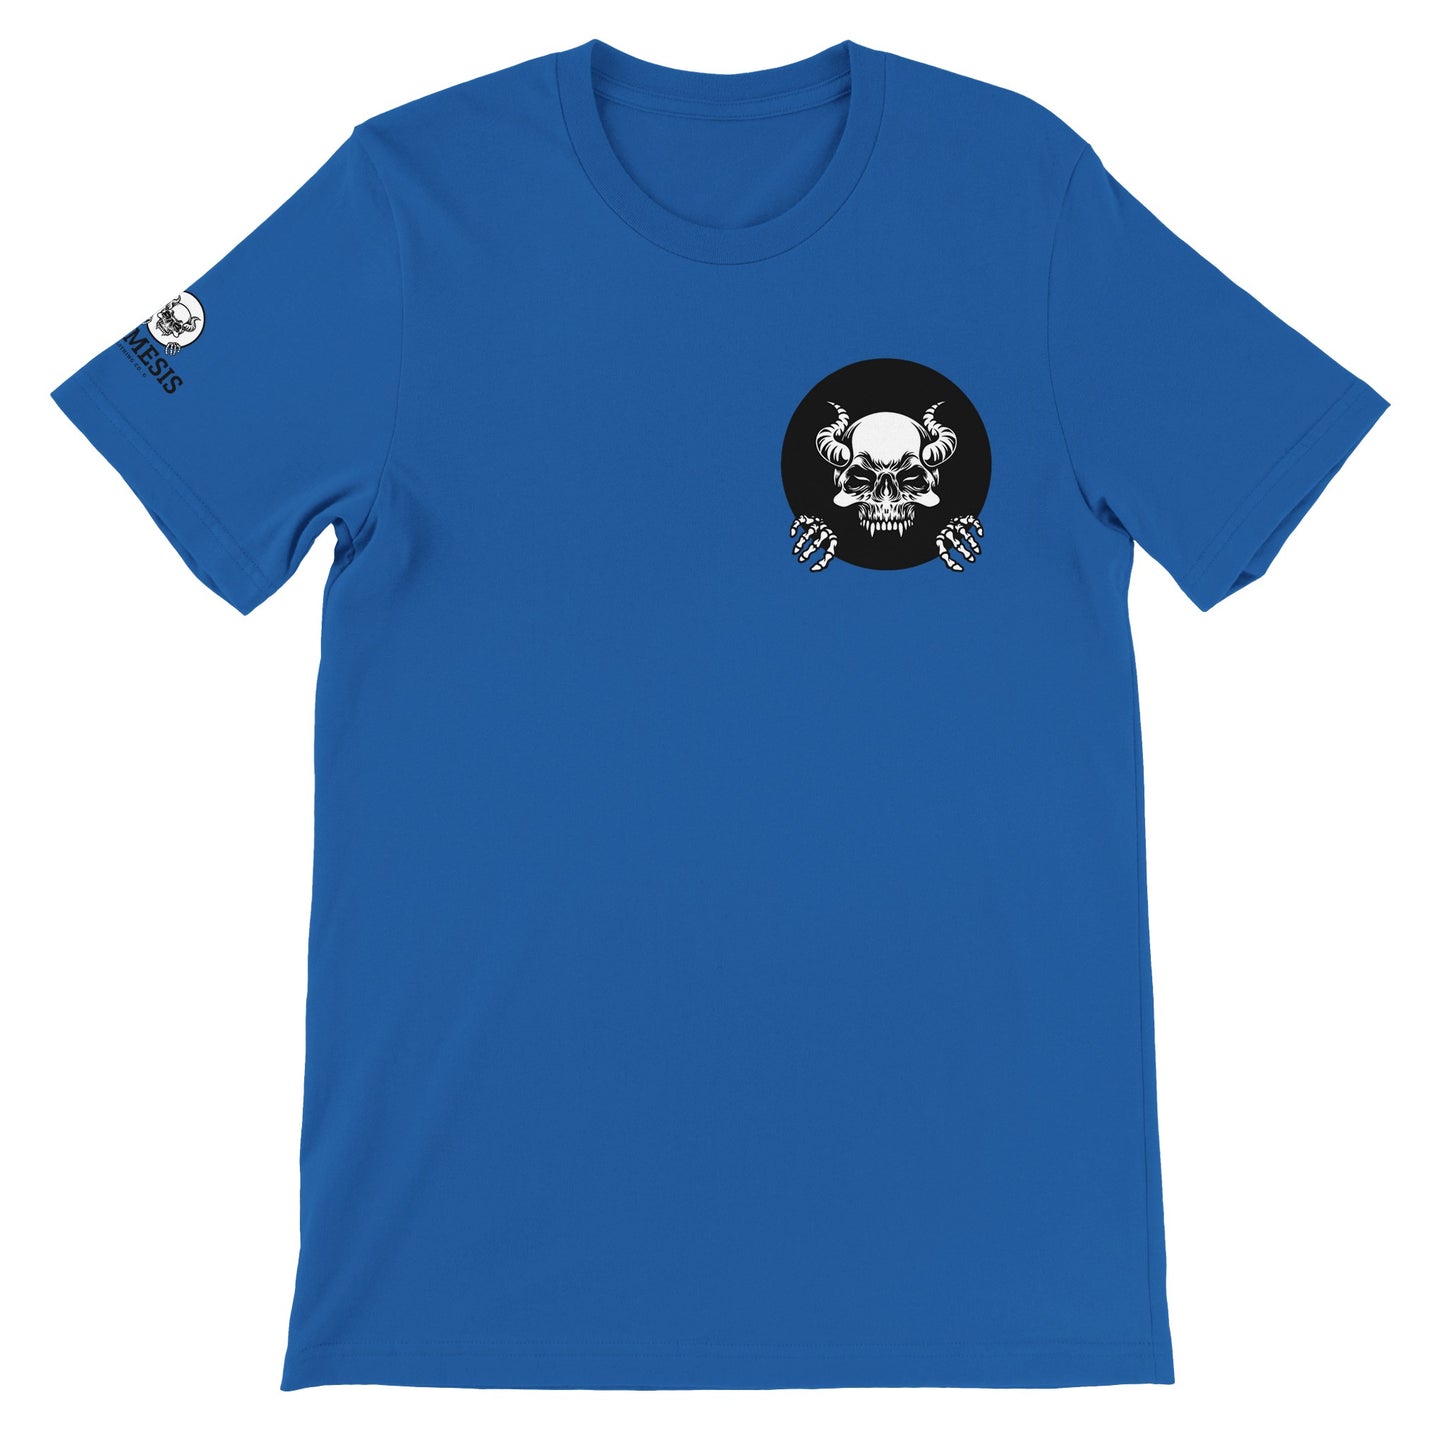 The "Here We Logo" Premium Unisex Crewneck T-shirt